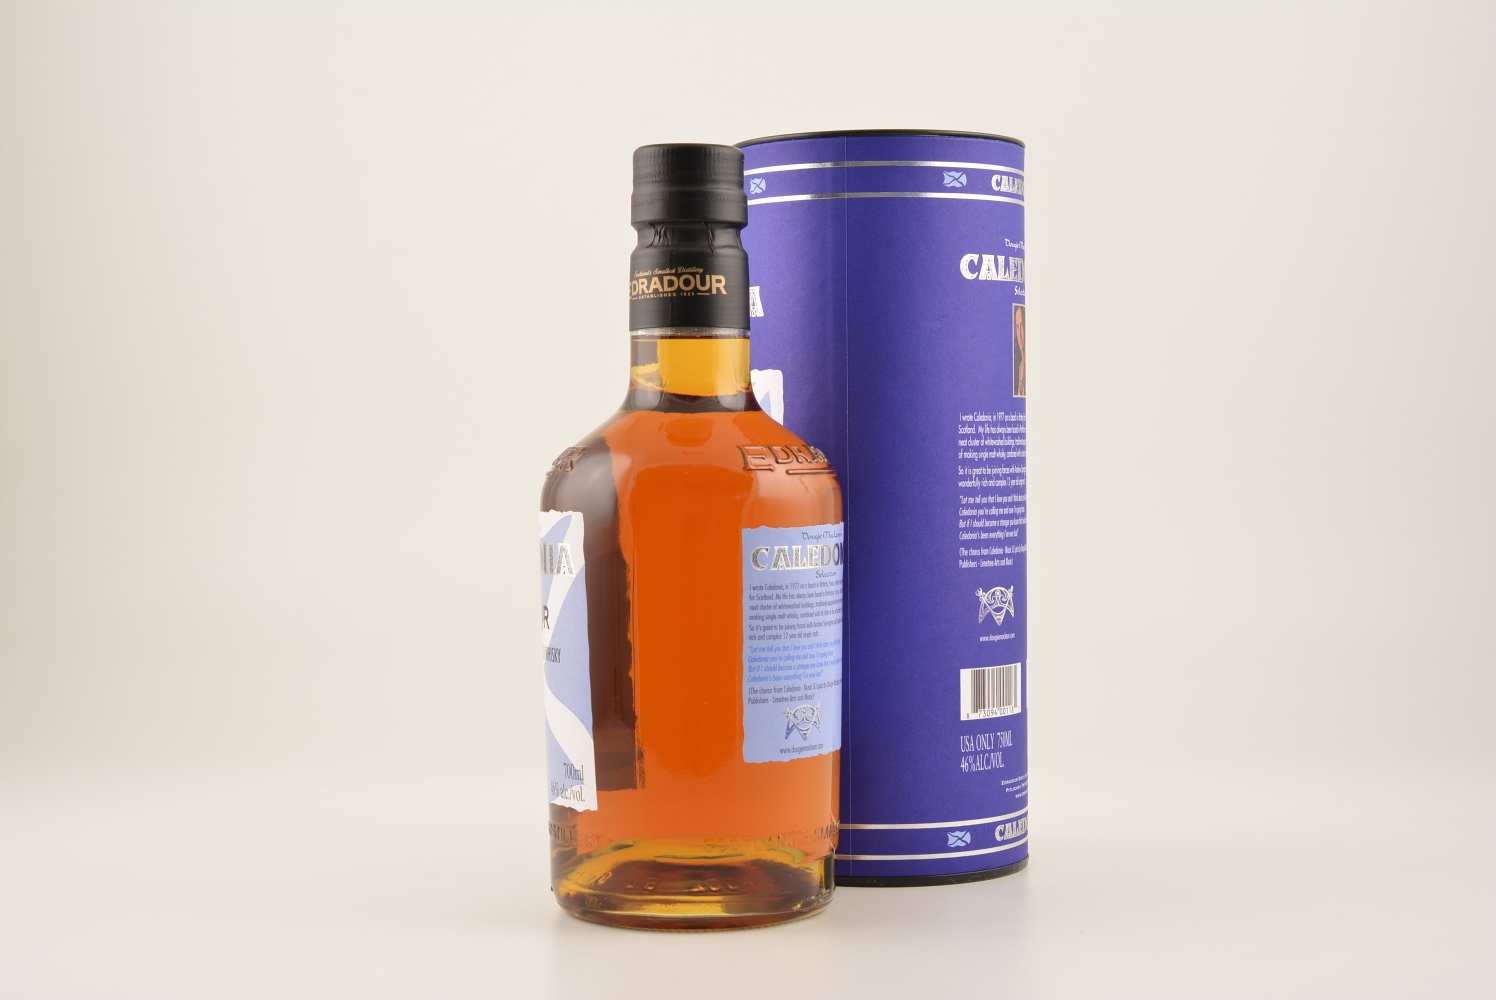 Edradour 12 Jahre Caledonia Highland Whisky 46% 0,7l